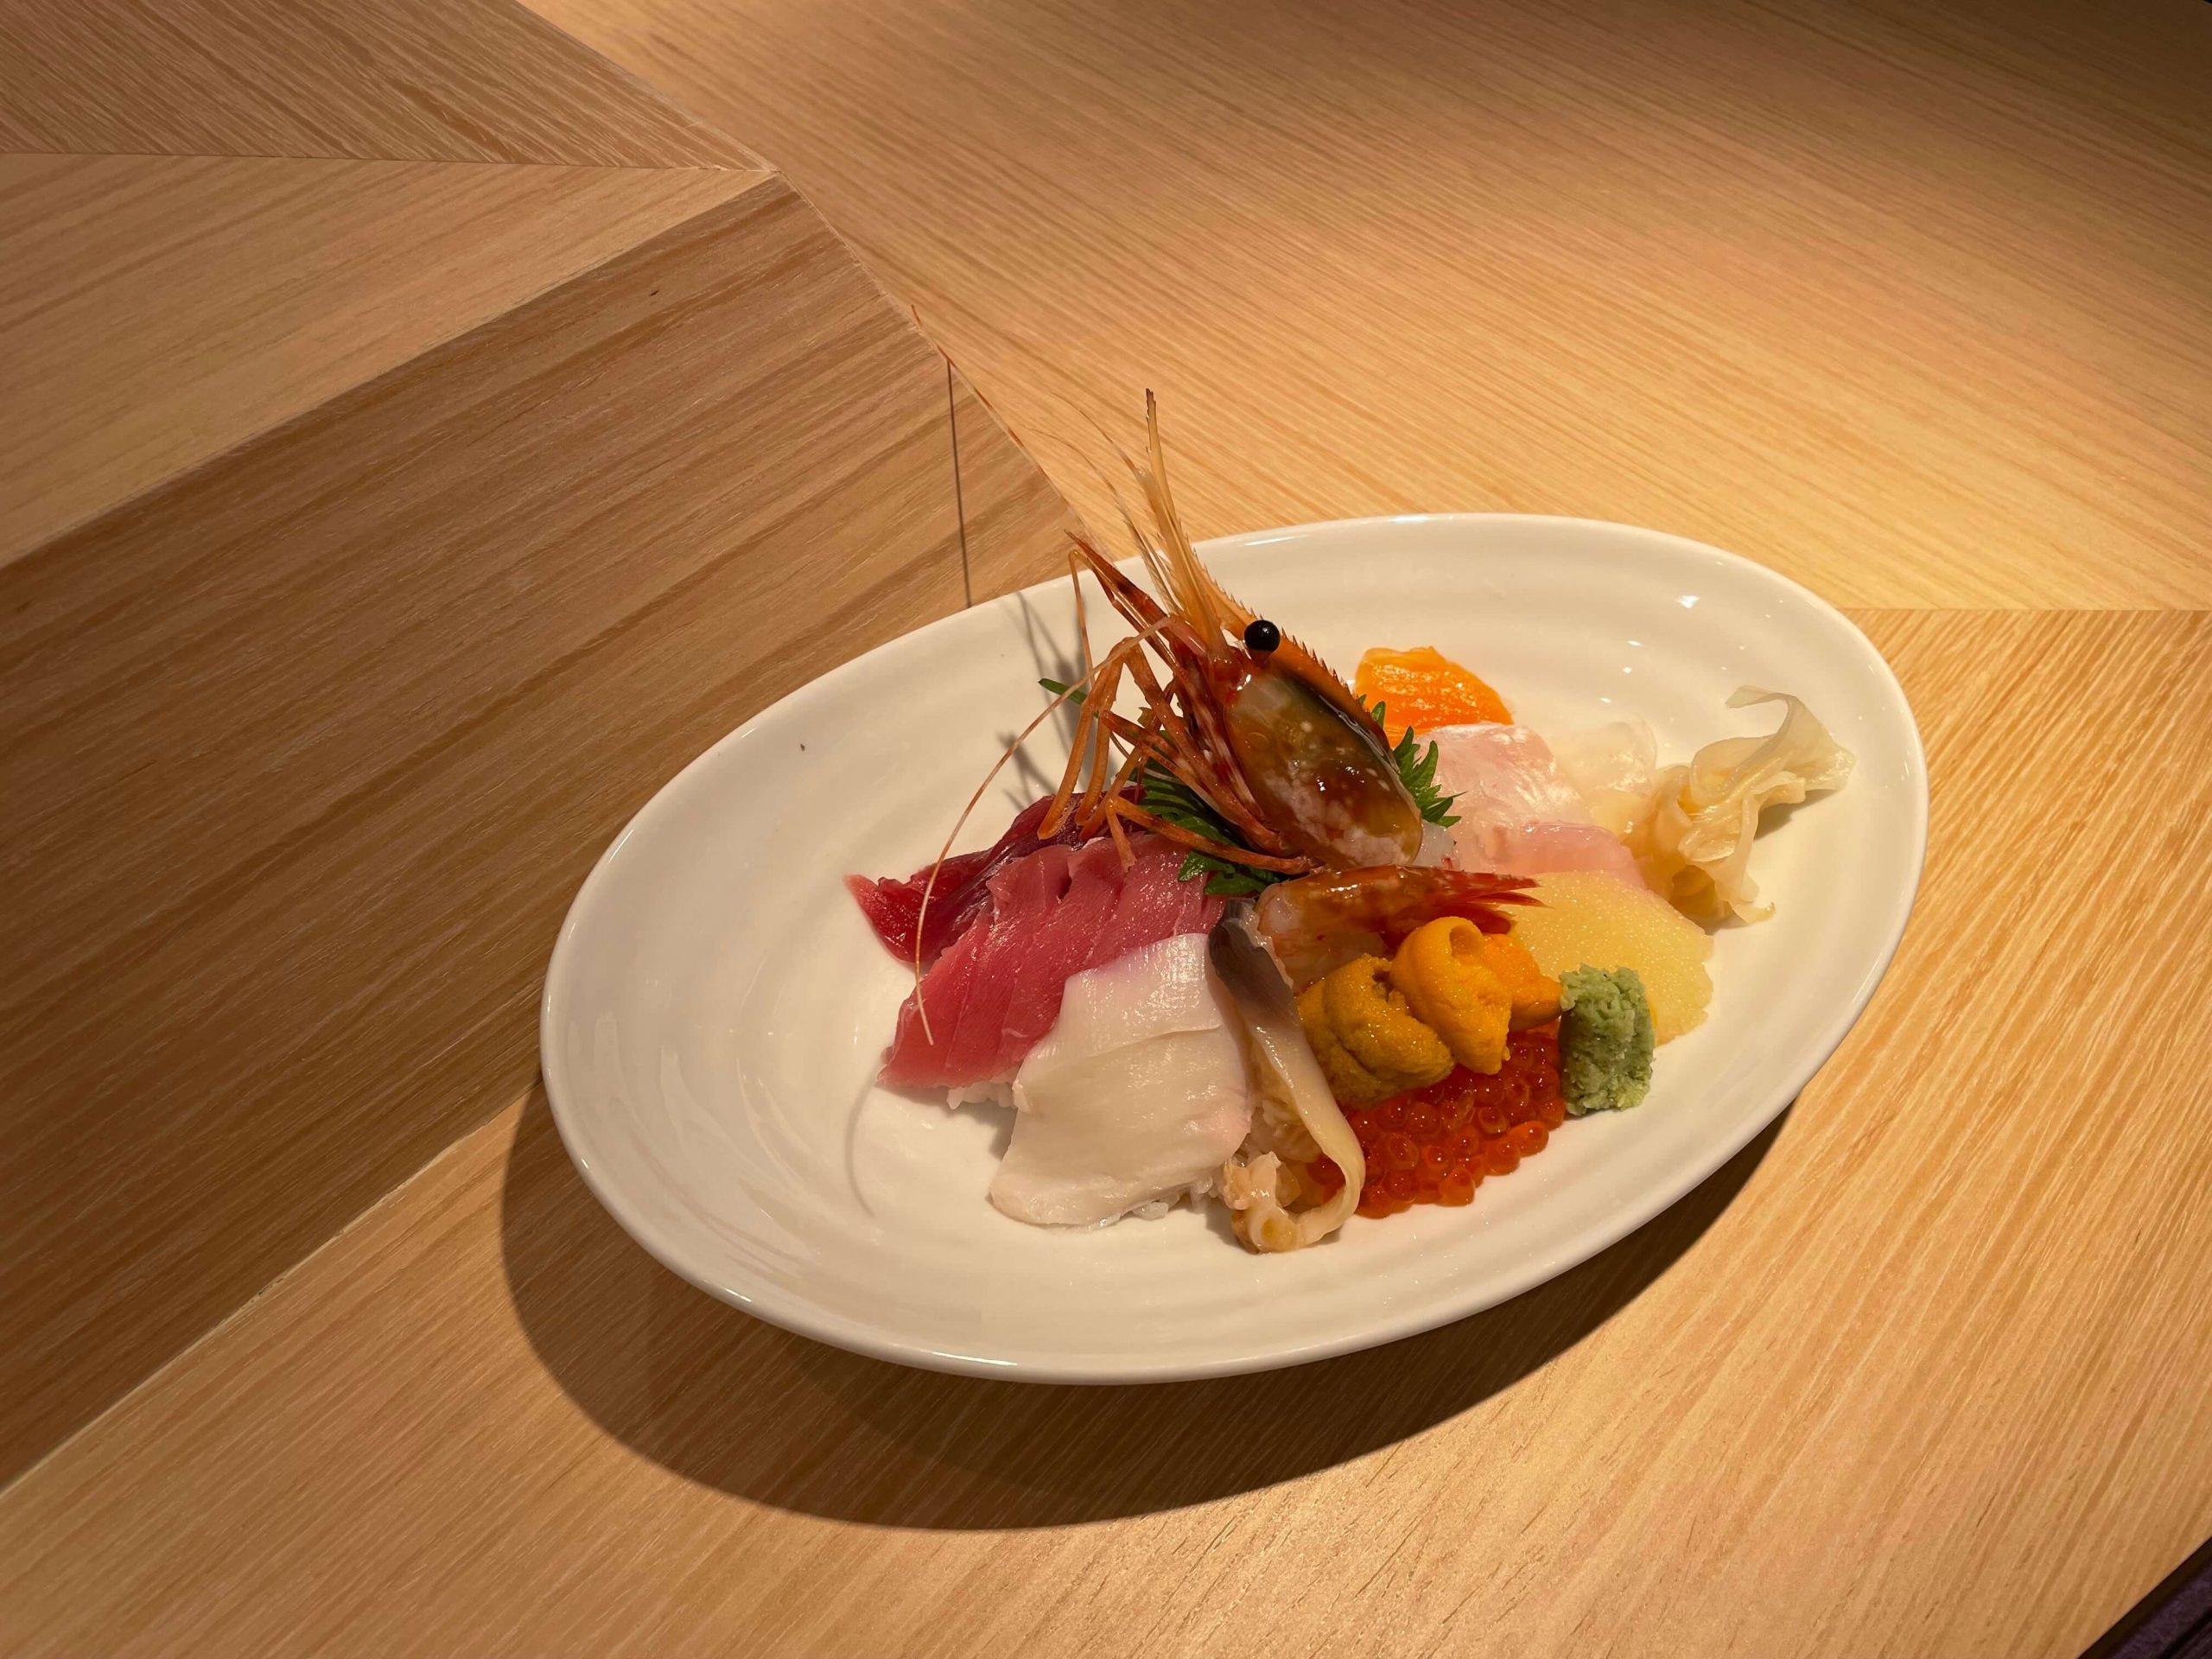 02-je-nagai-hokkaido-cuisine-kaisendon-hungrygowhere-scaled